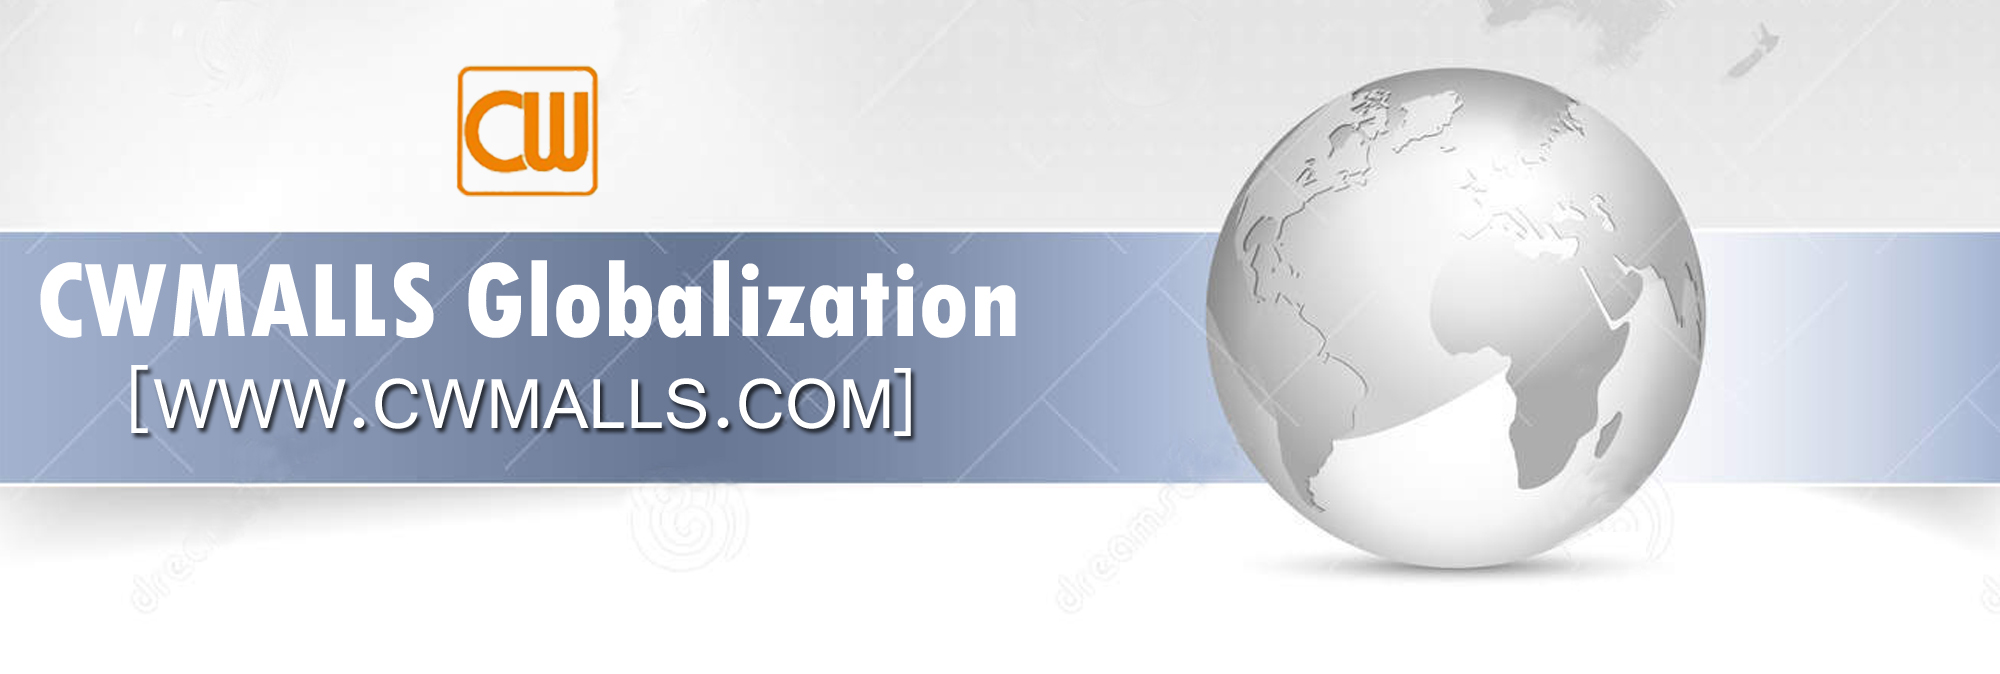 CWMALLS Globalization.jpg